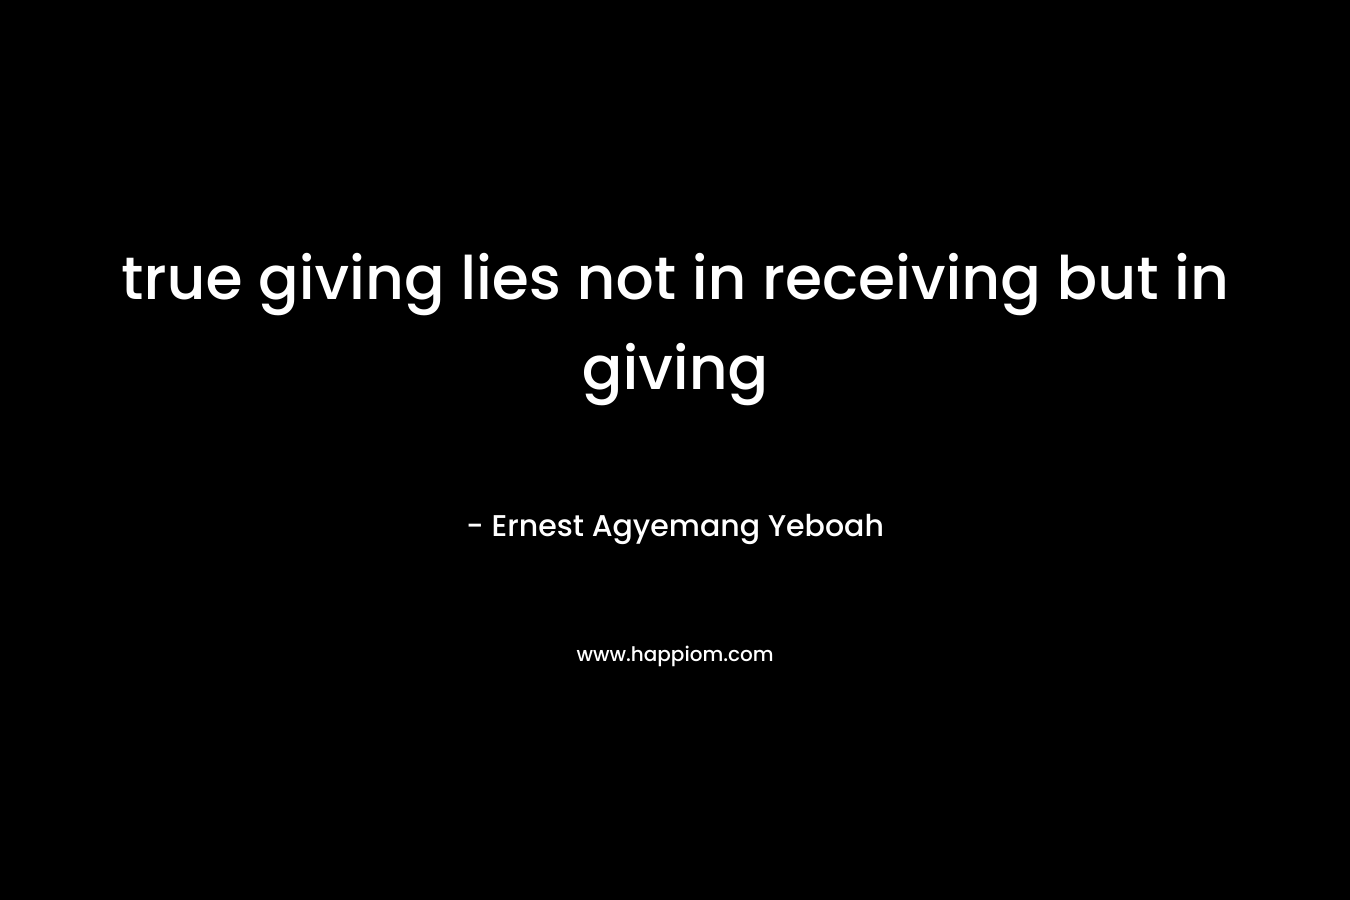 true giving lies not in receiving but in giving